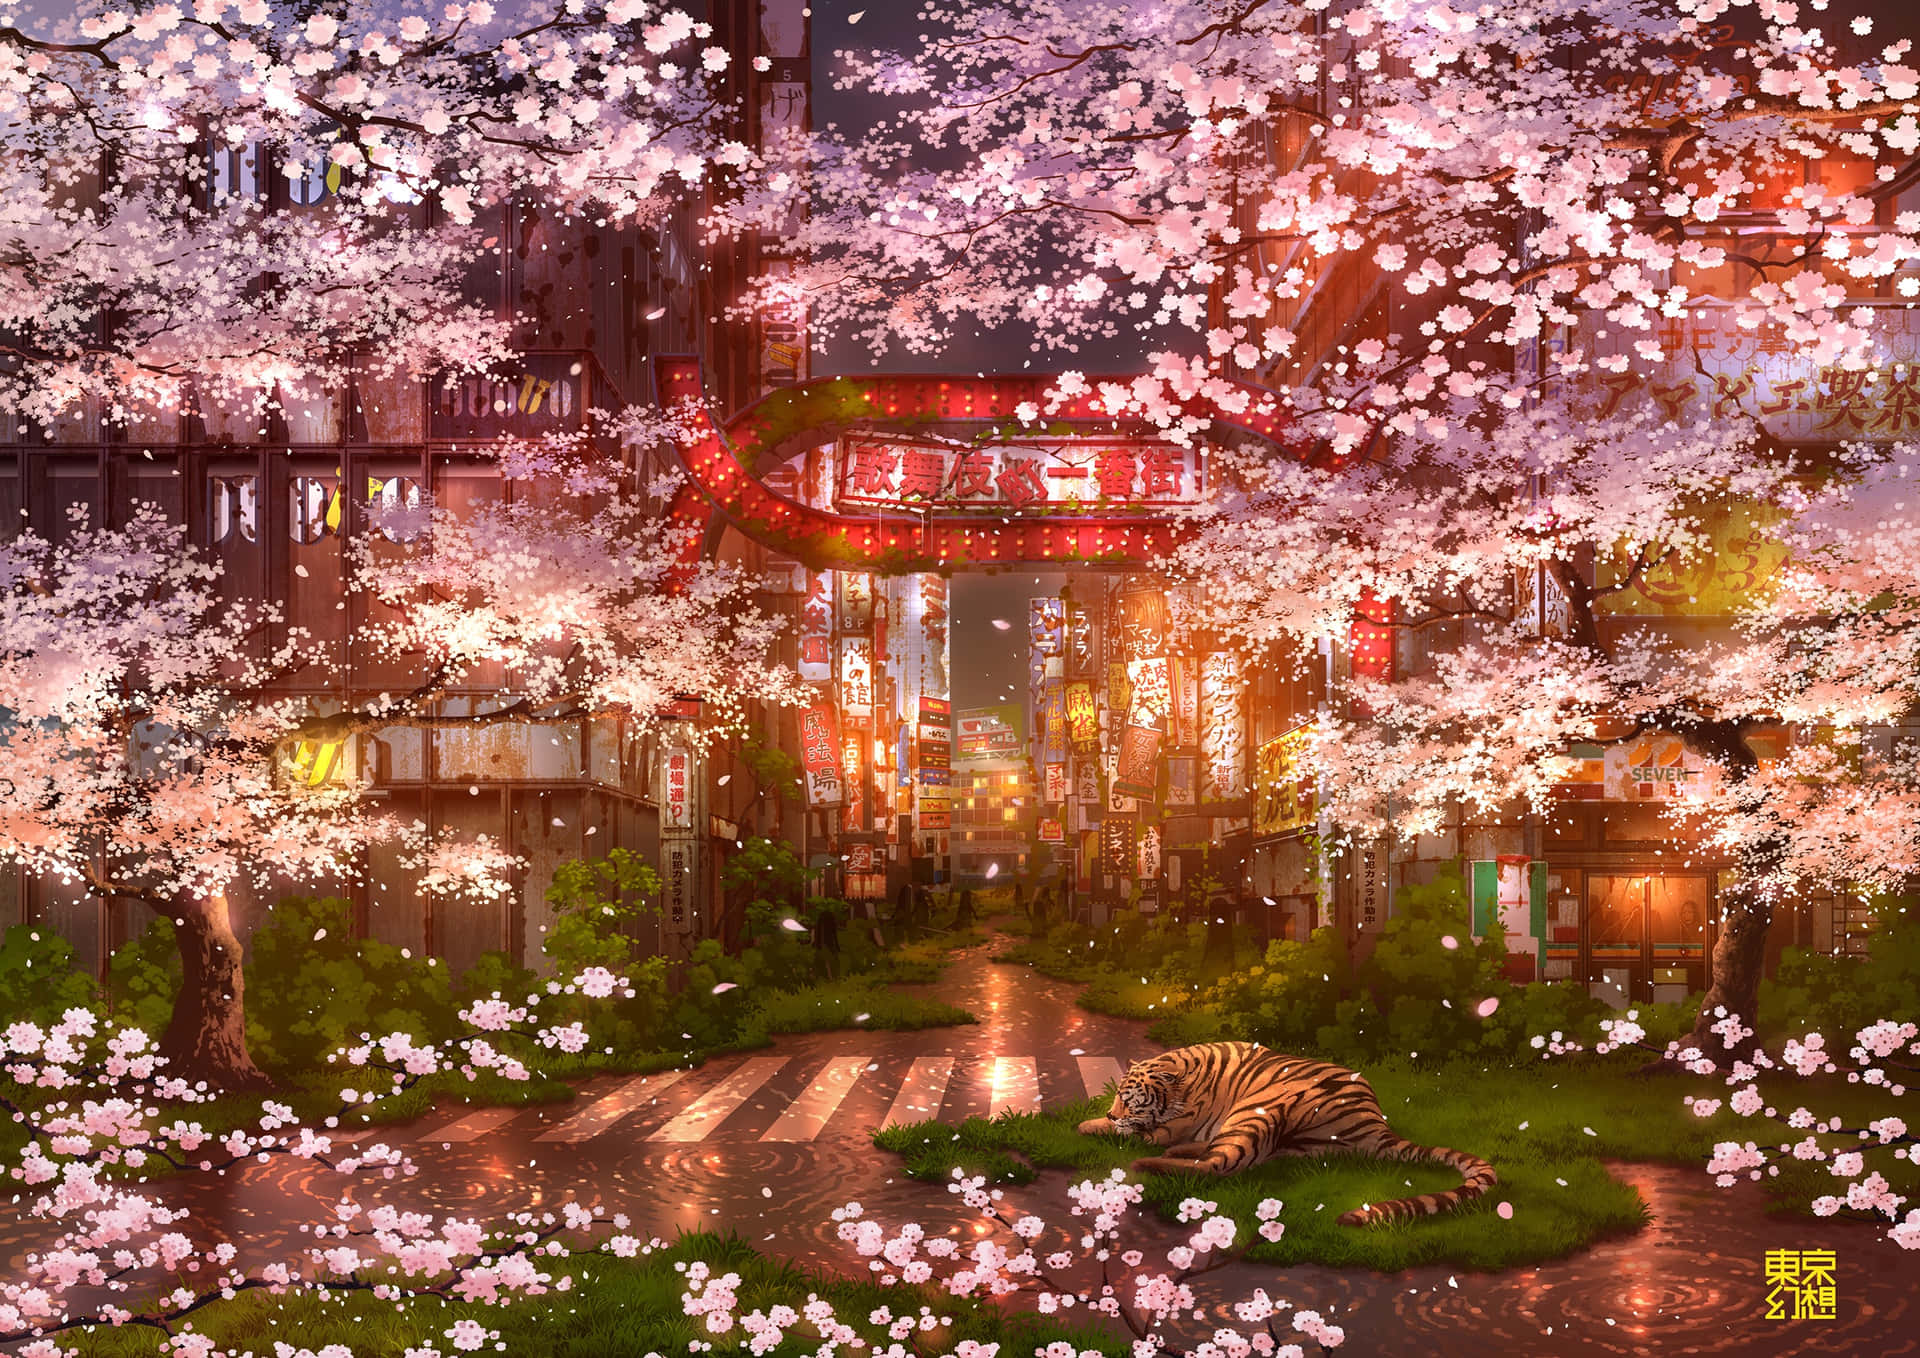 Anime style illustration of cherry blossoms - Stock Illustration [73475470]  - PIXTA